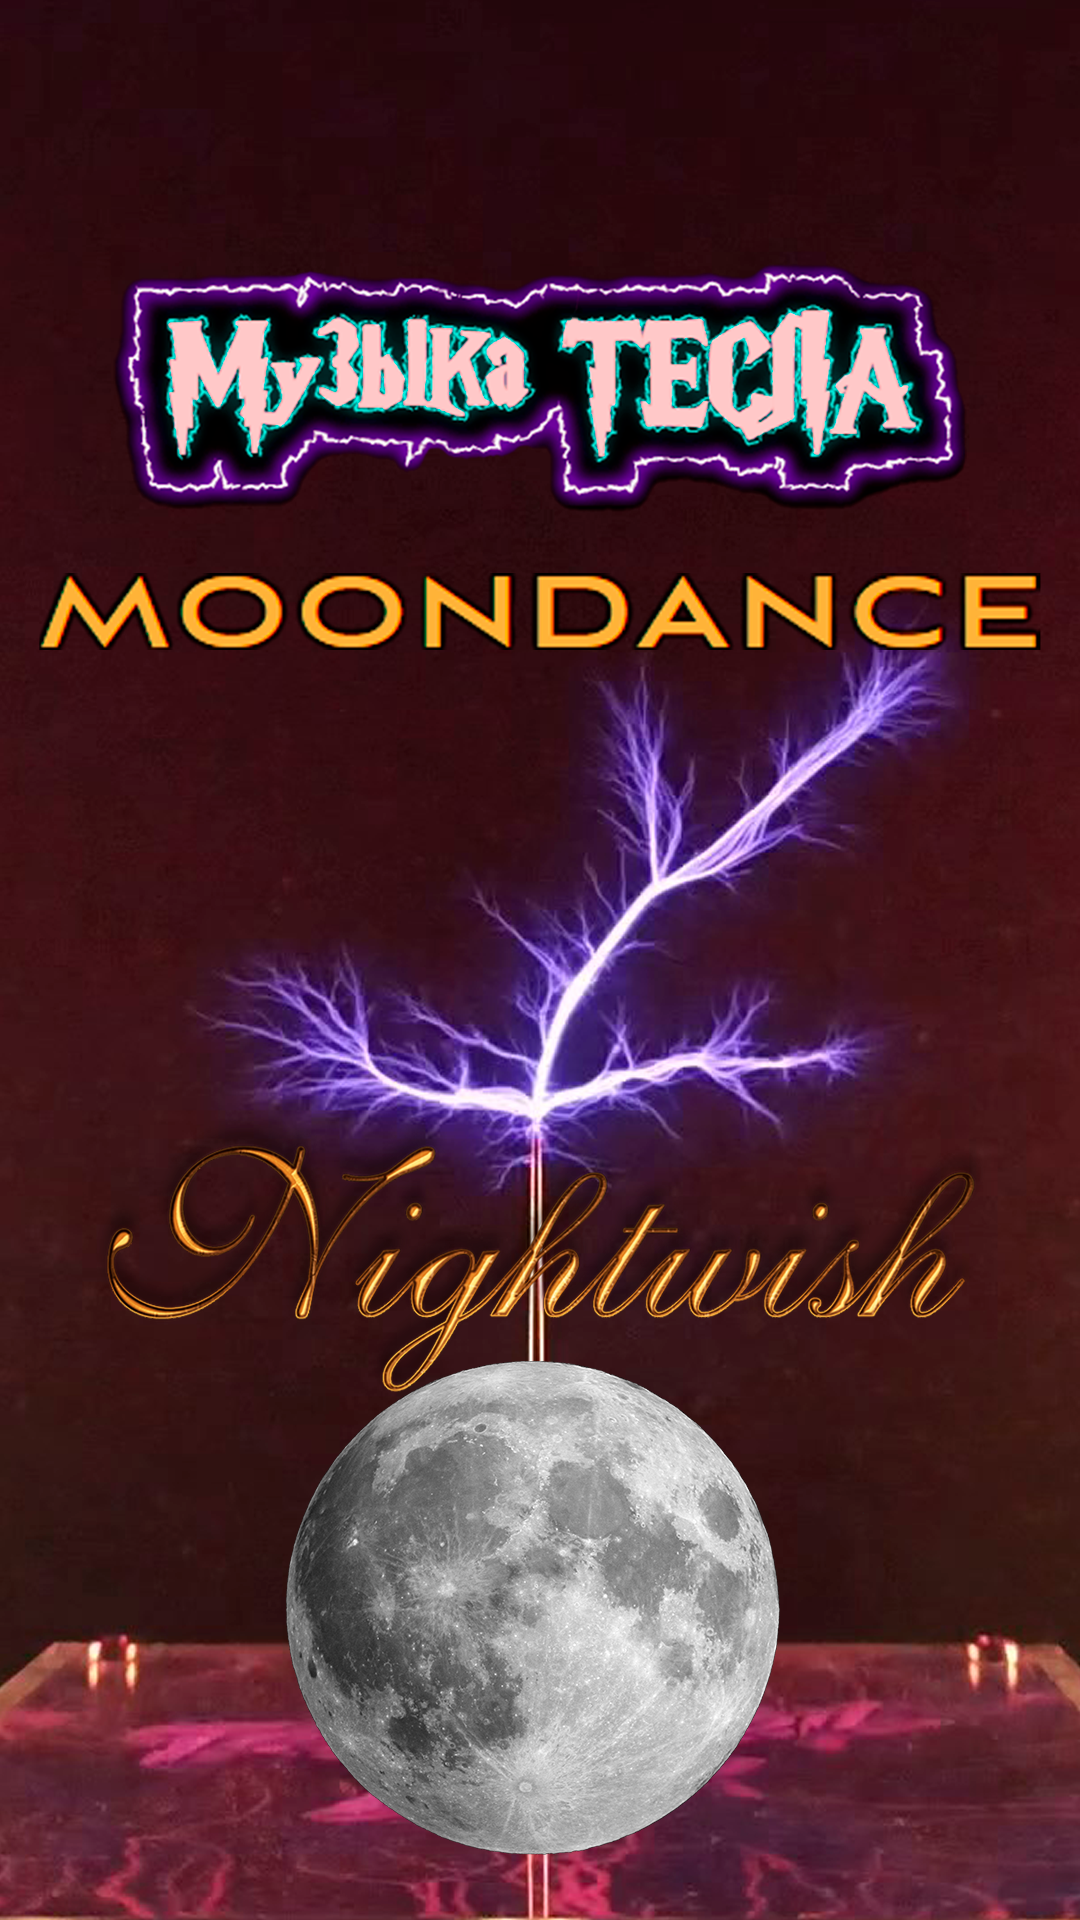 Moondance - Nightwish Tesla Coil Mix #музыкатесла